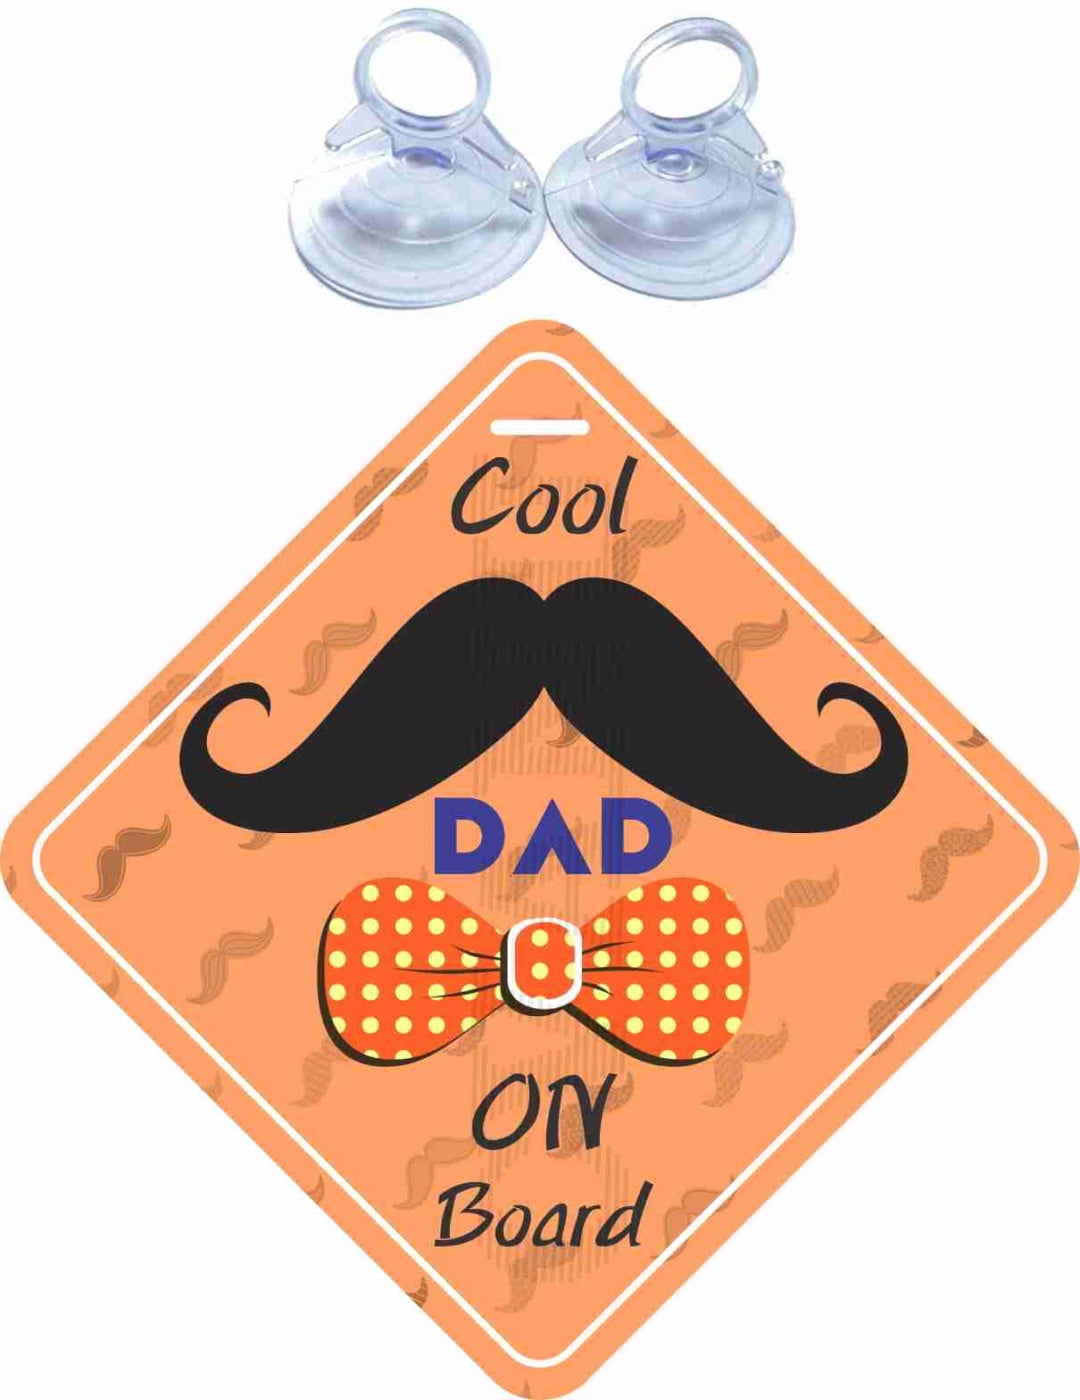 Cool DAD on Board Safety Car Sticker